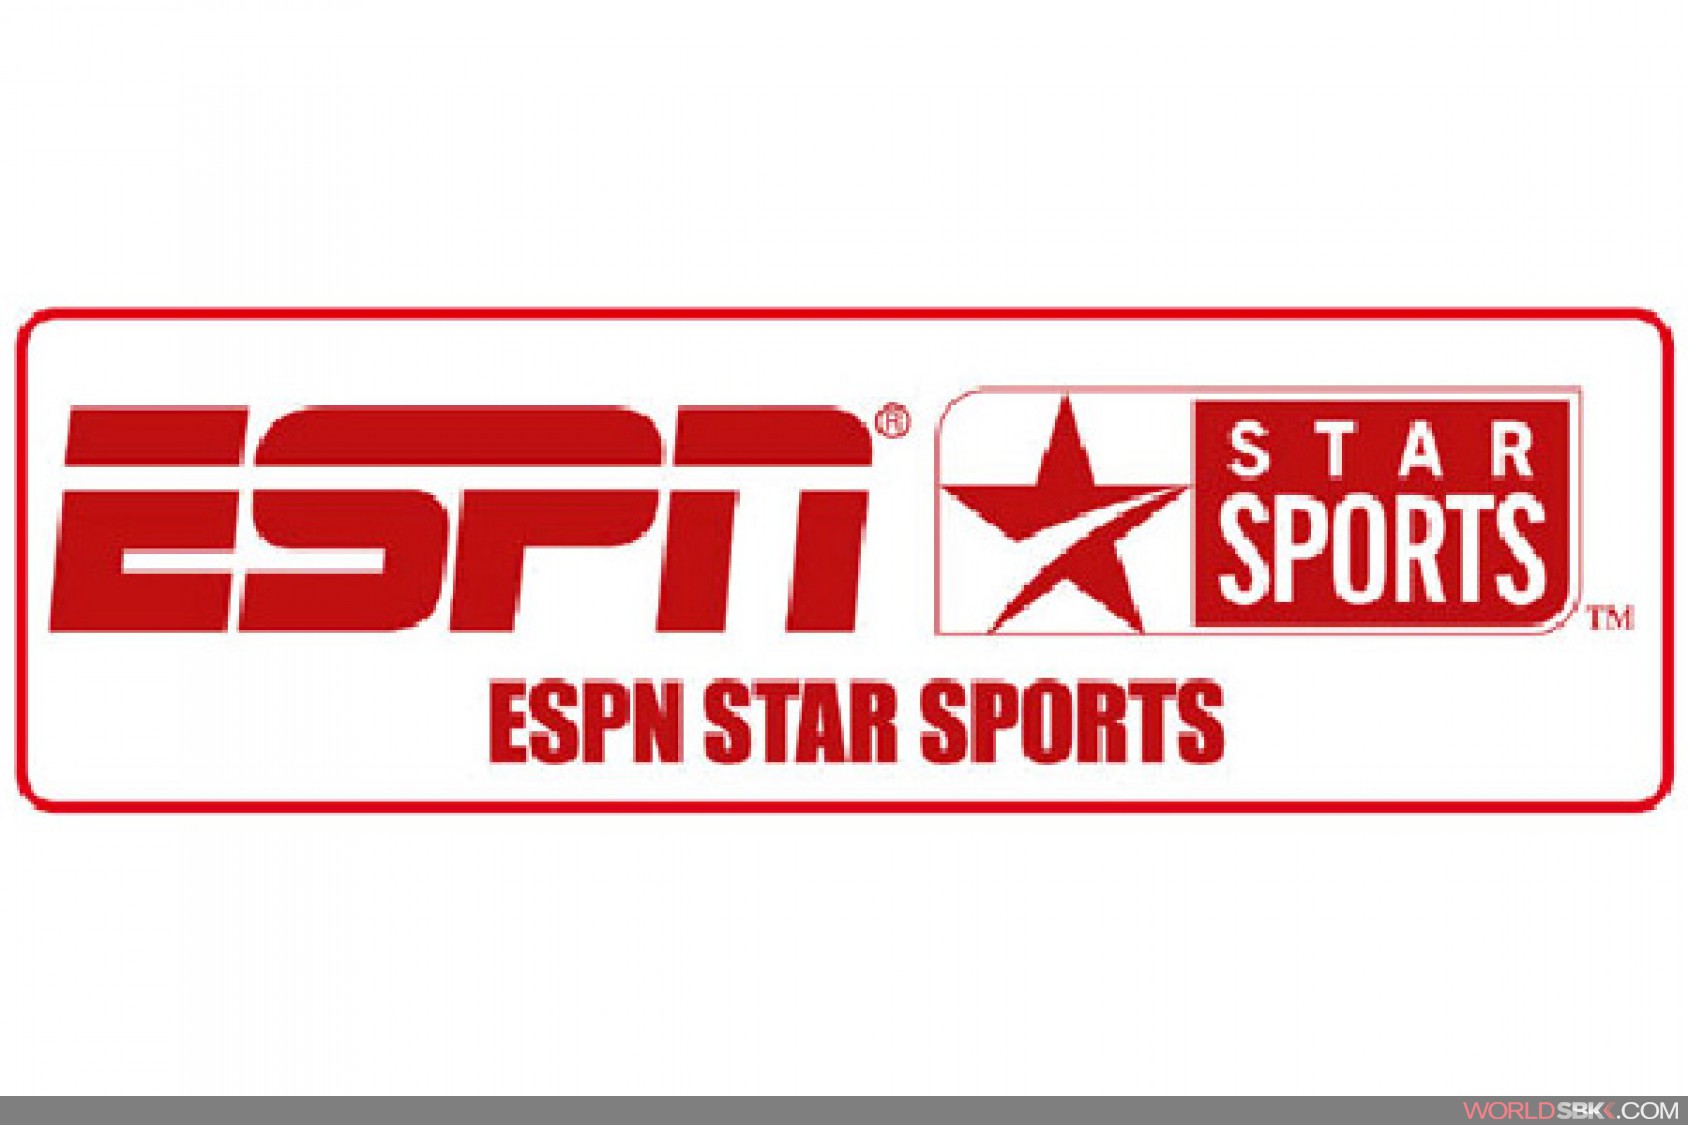 espn star sports logo